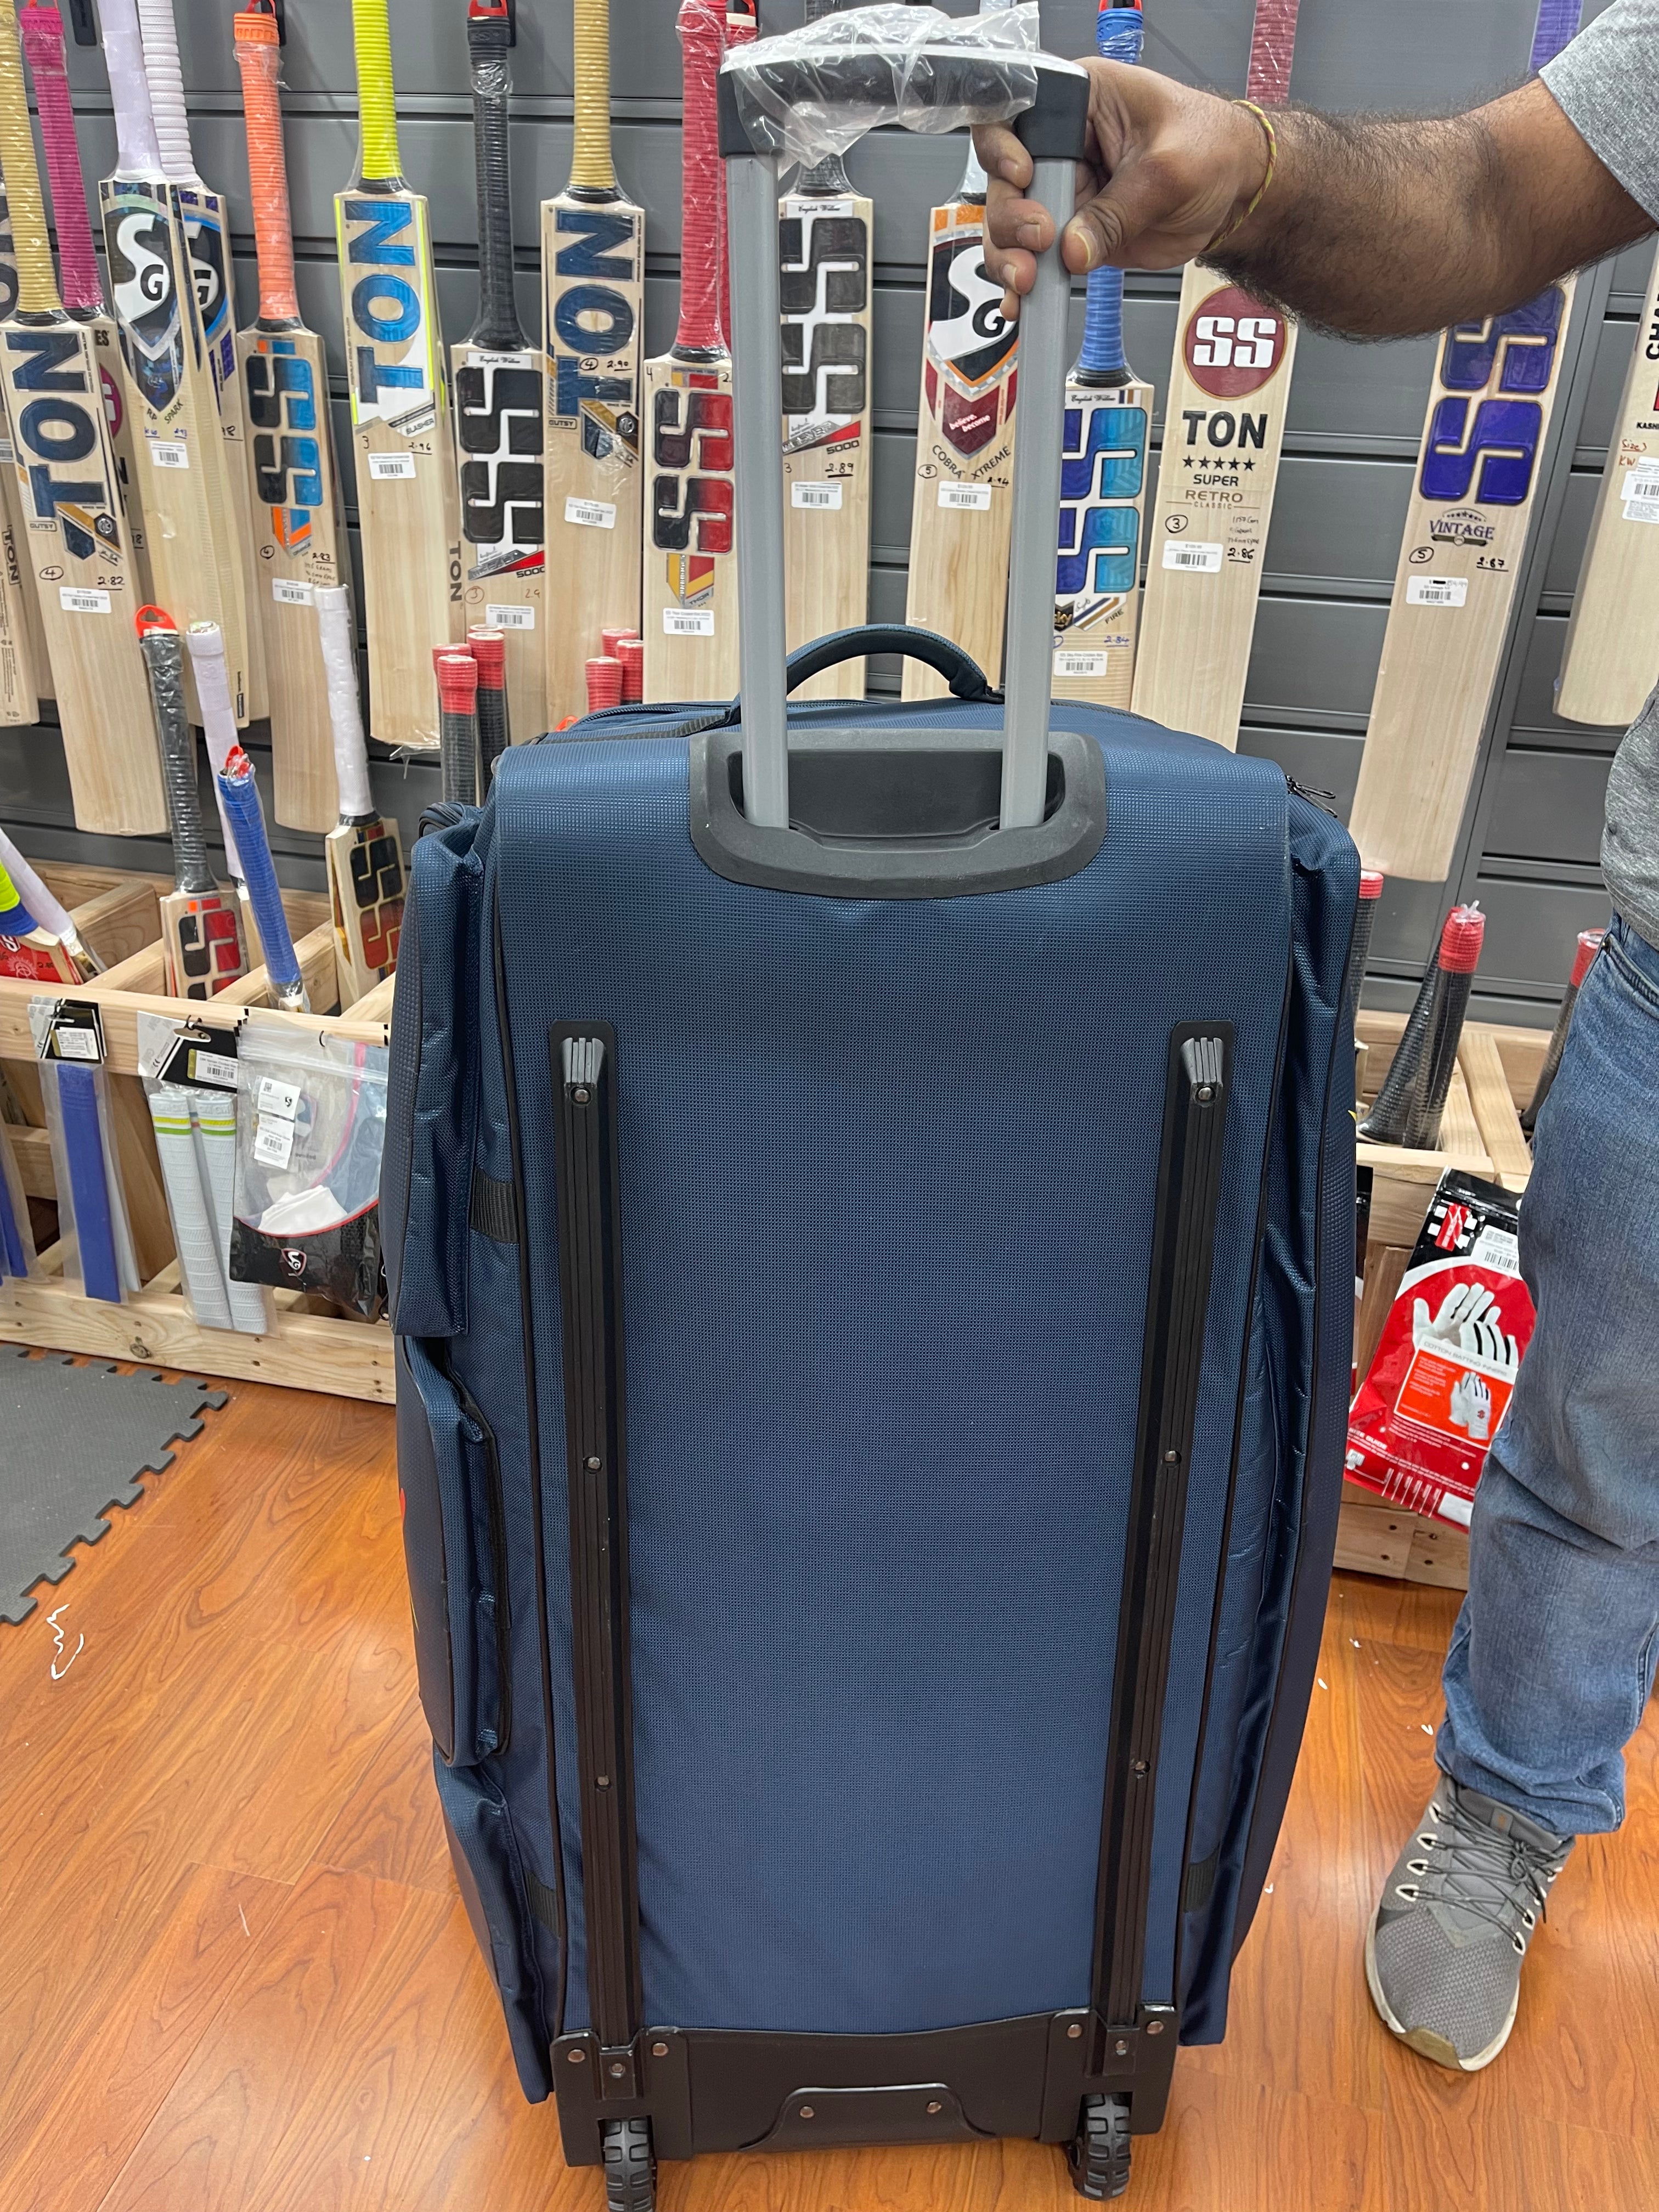 Raydn Professional Wheelie Premium Adult Cricket Kit Bag (Navy Blue / Black)